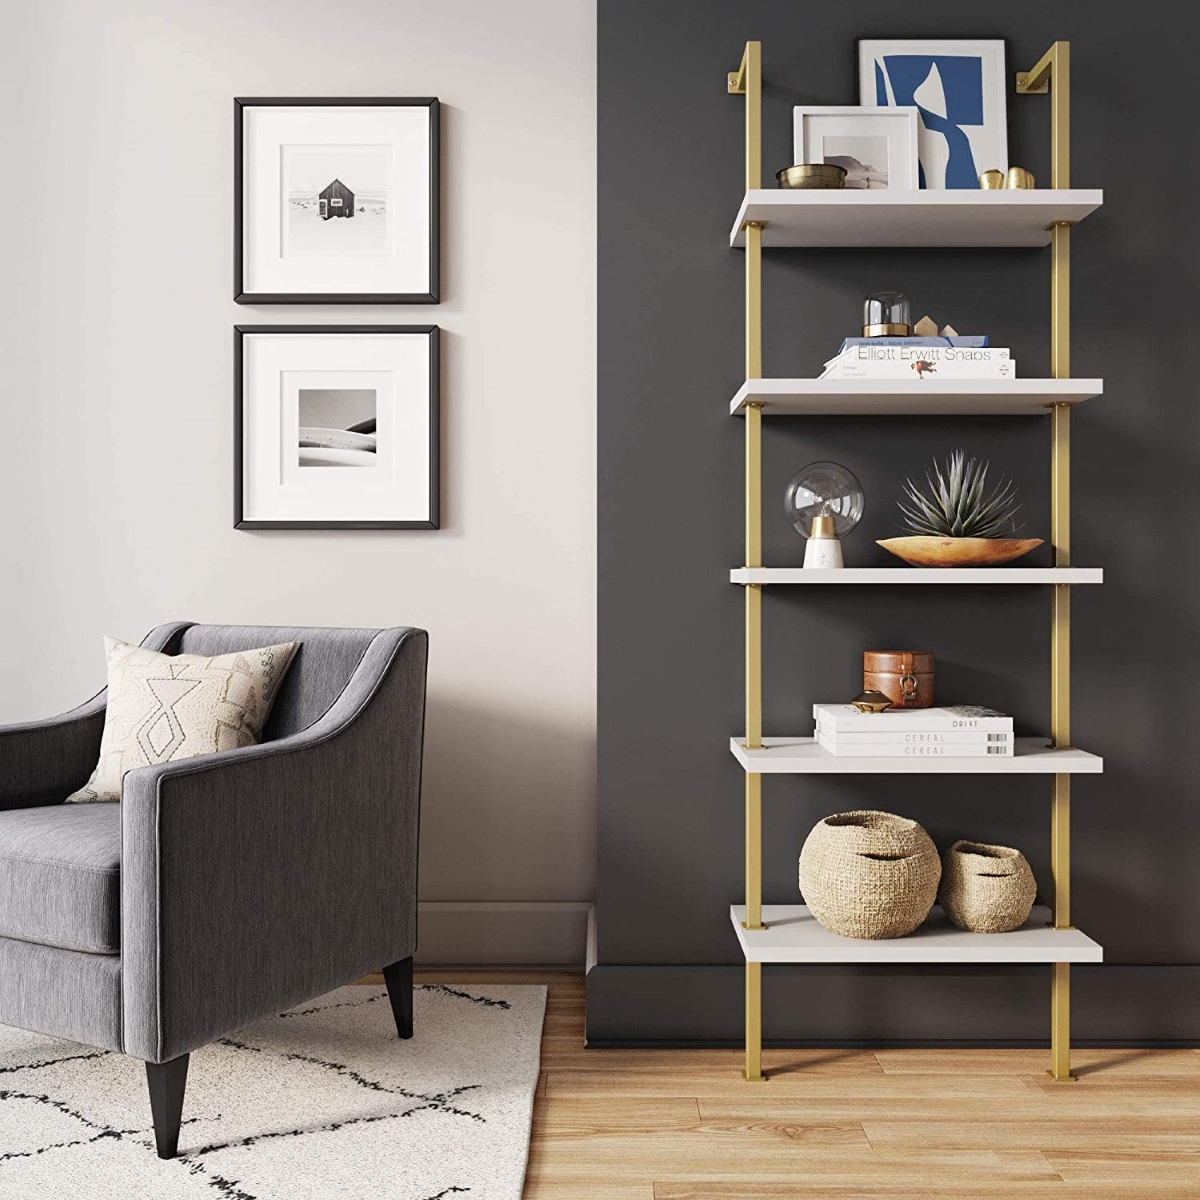 apartment decor ideas - narrow shelving unit